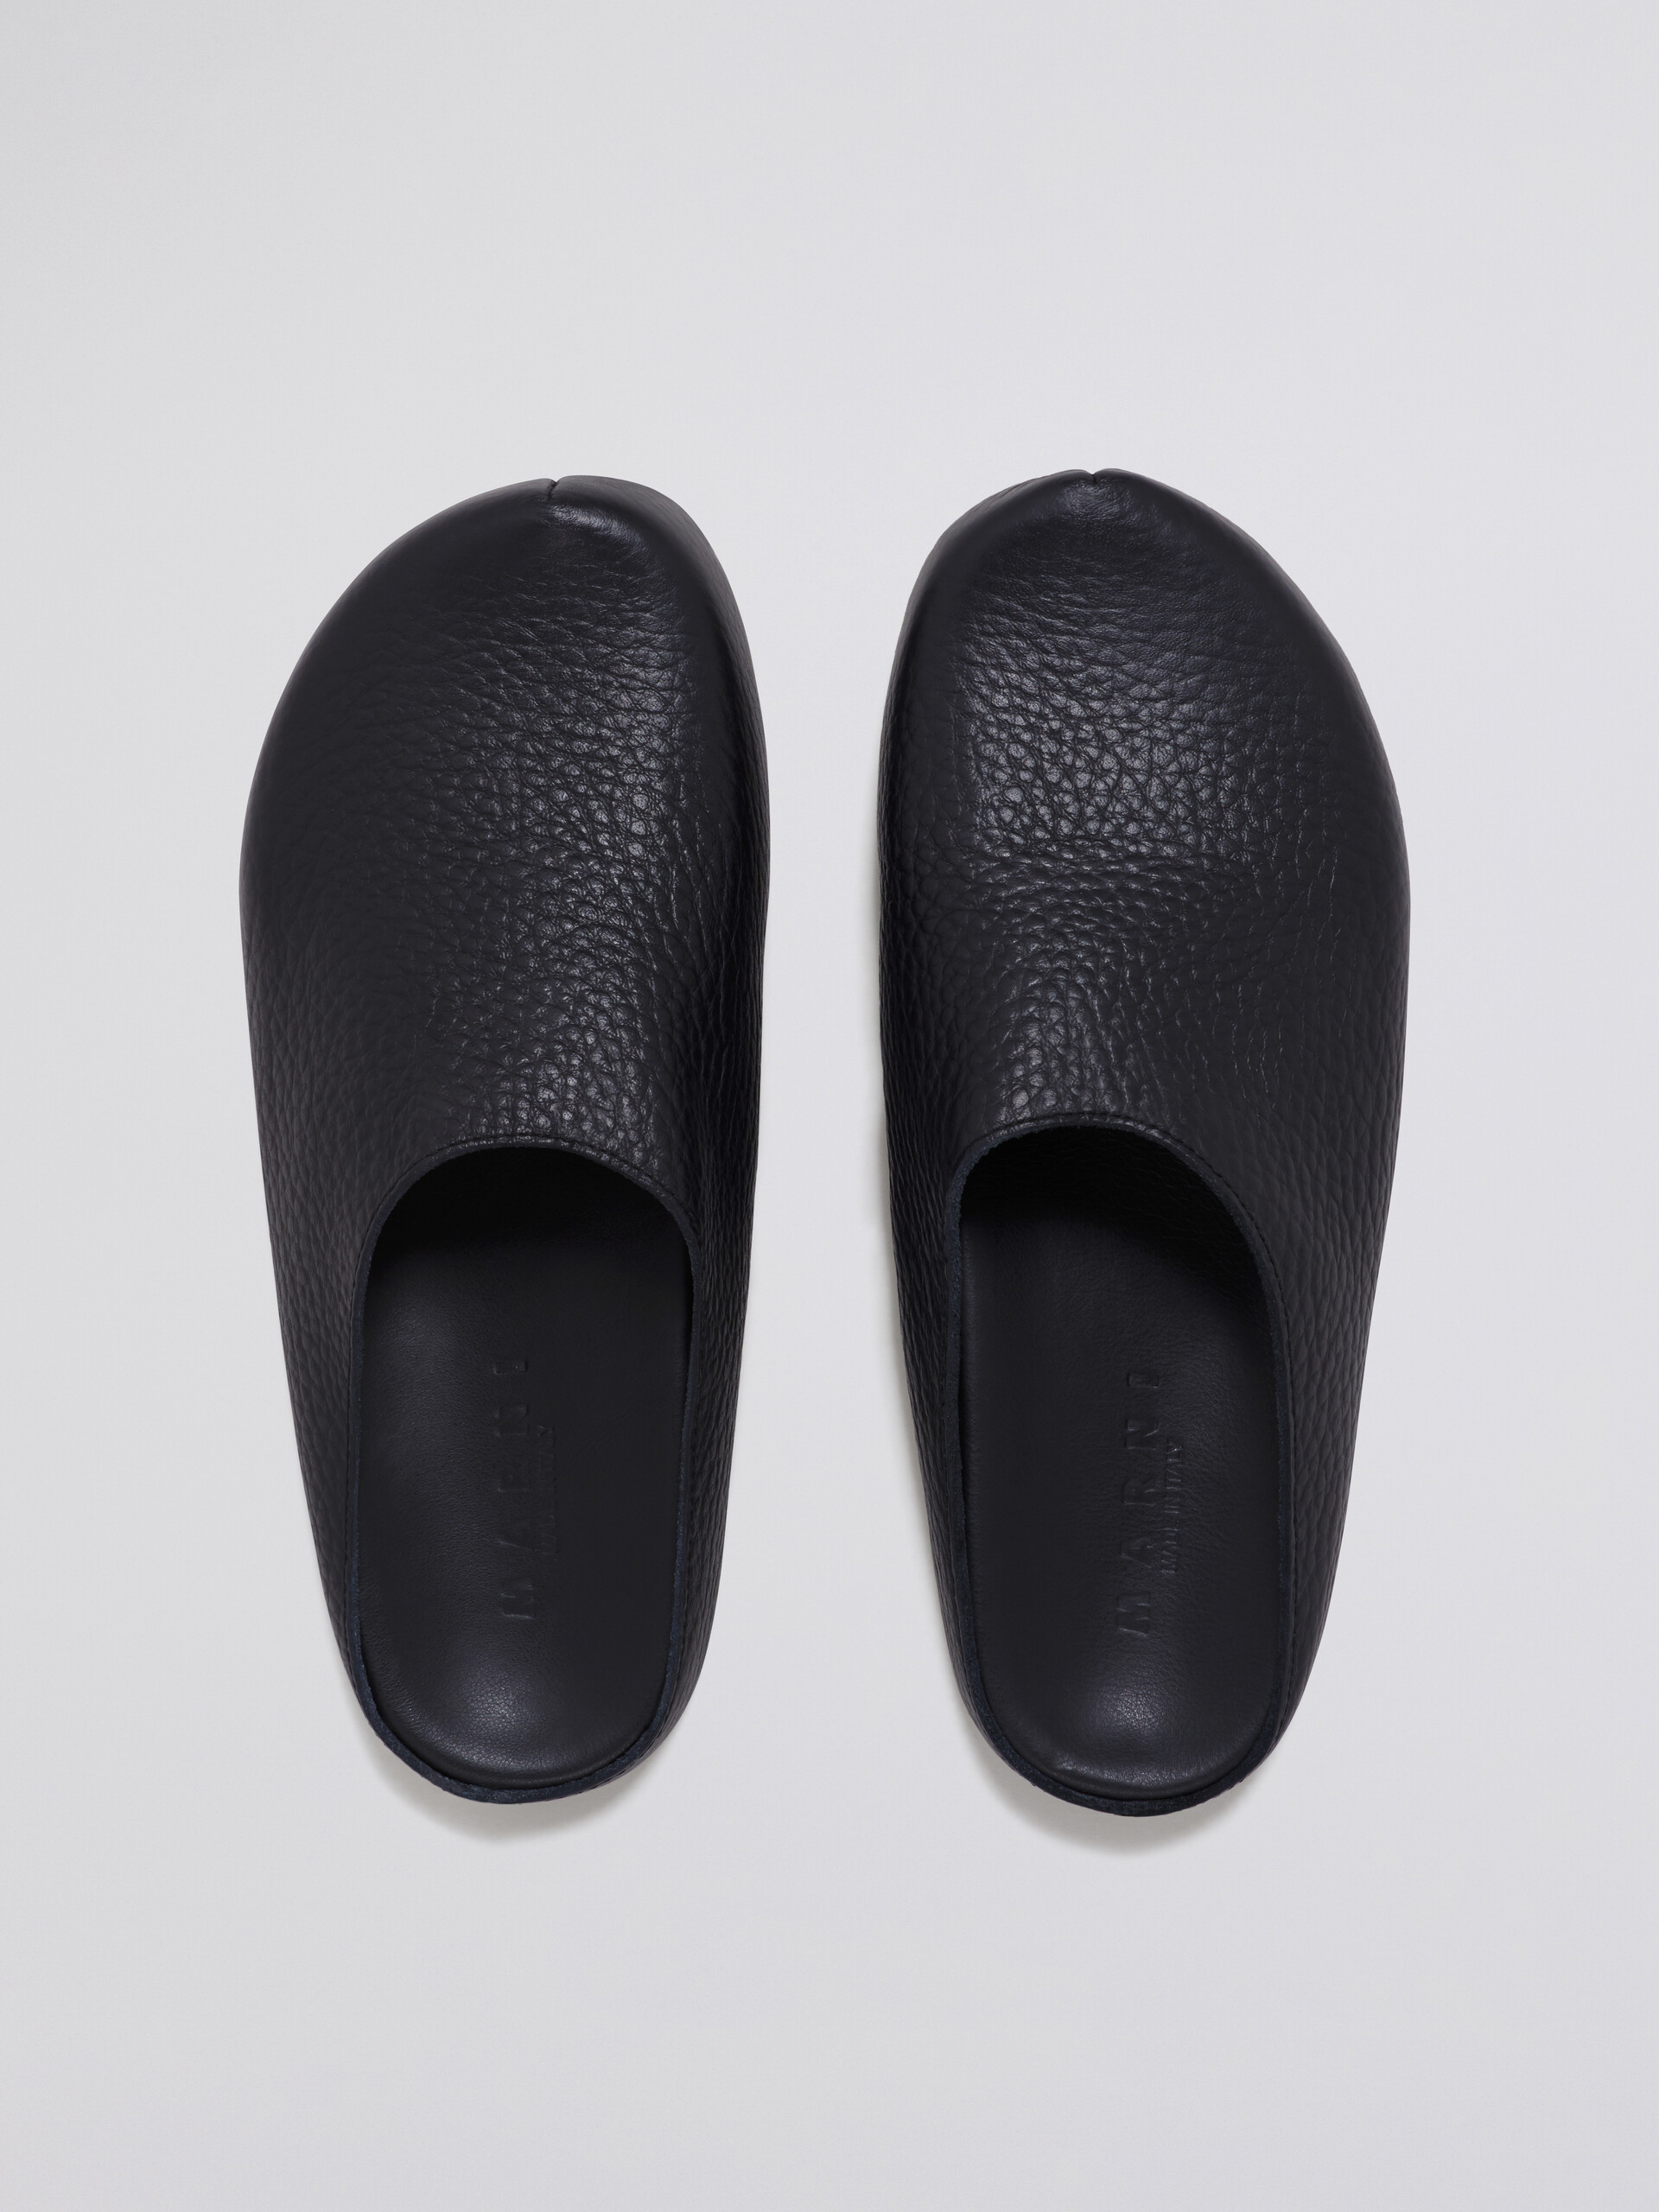 Unisex-Sandale aus schwarzem genarbtem Kalbsleder - Holzschuhe - Image 4